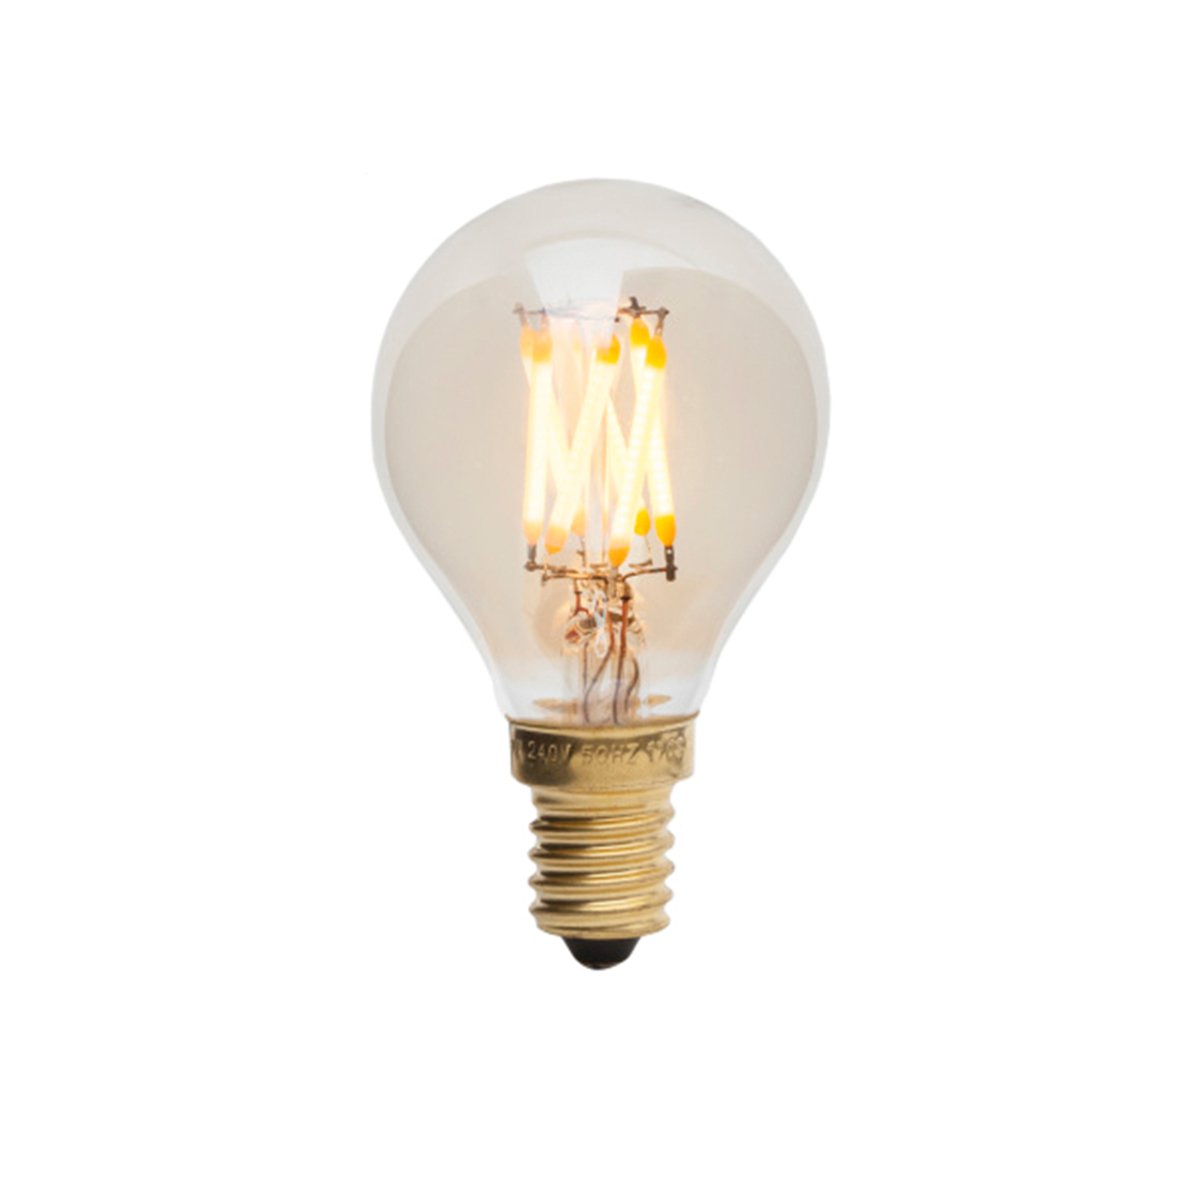 Pluto LED bulb 3W tinted, | Finnish Design Shop